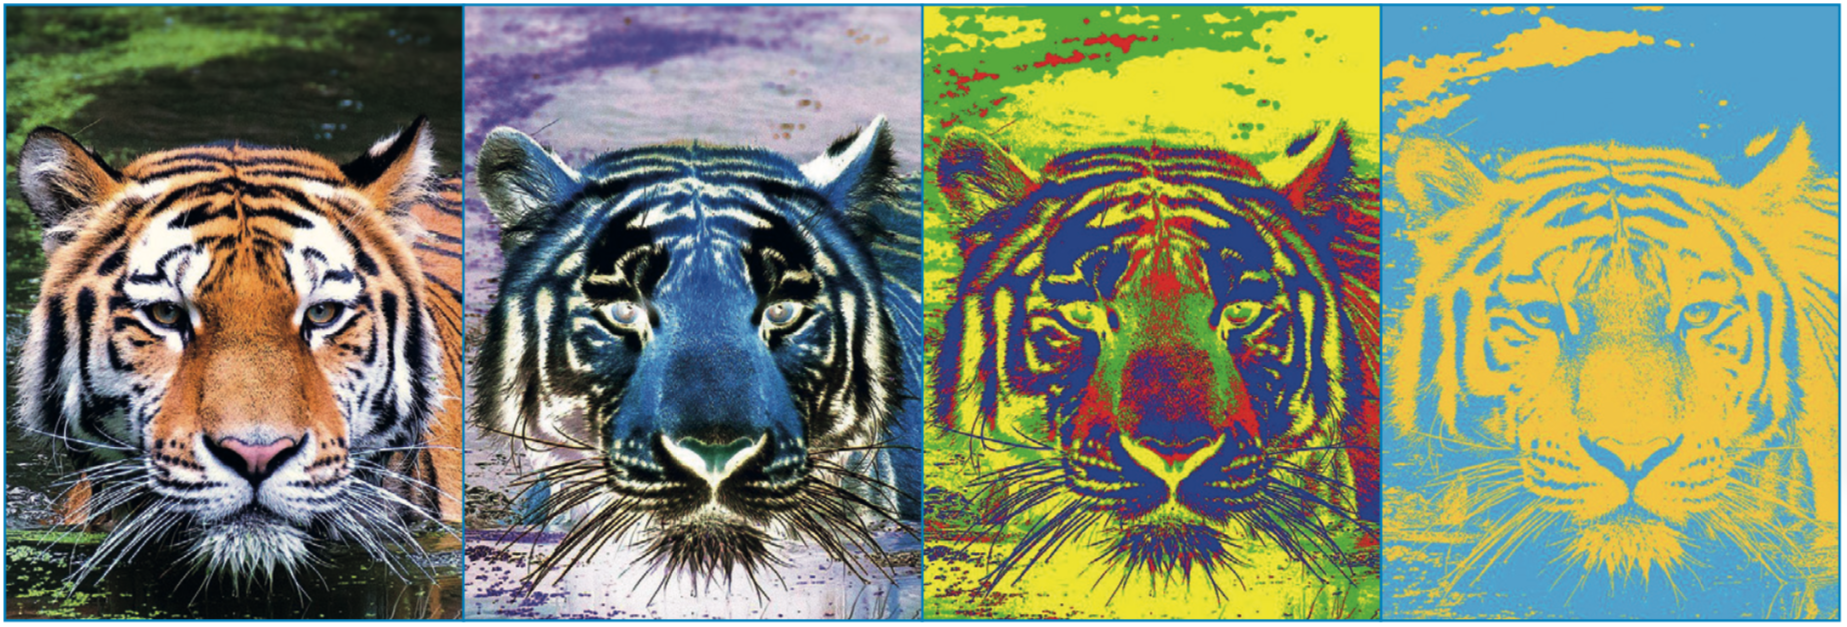 Immagini filtrate di una tigre